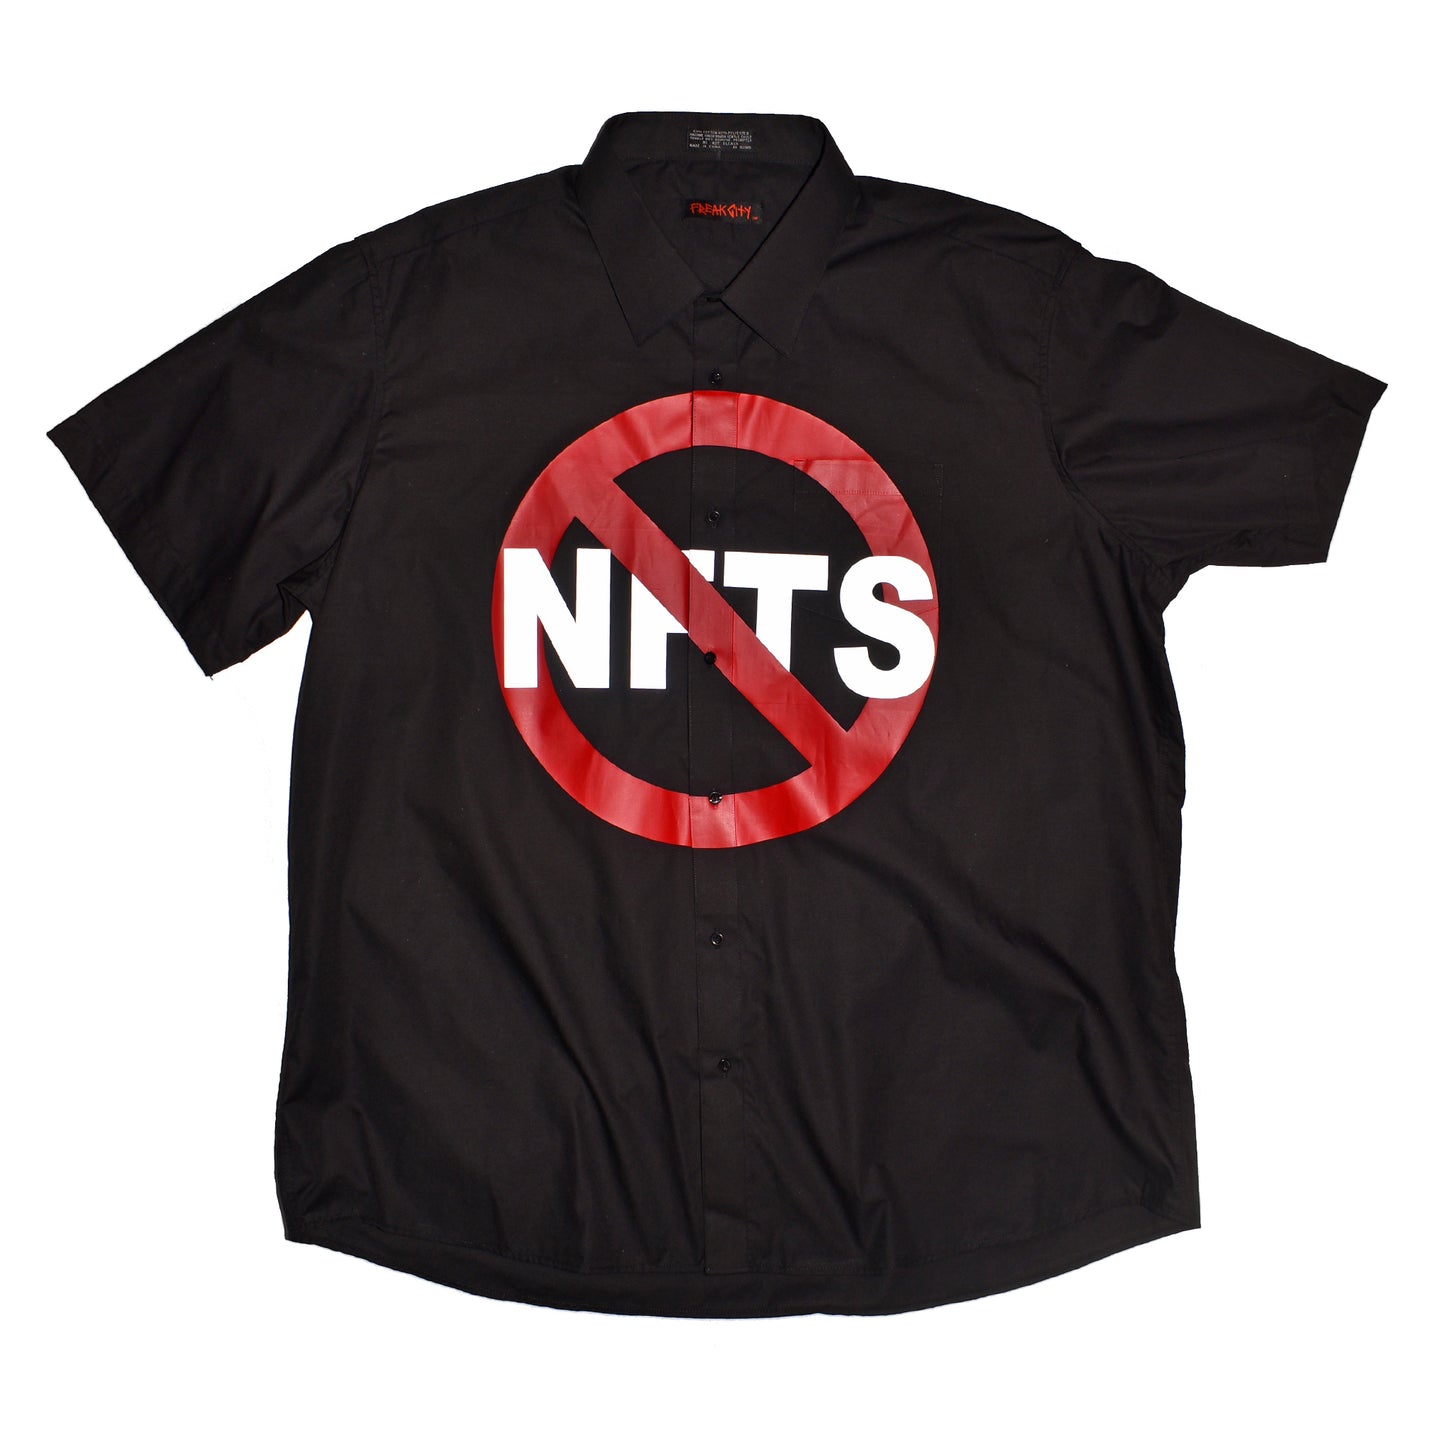 NO NFTS Button Down Shirt